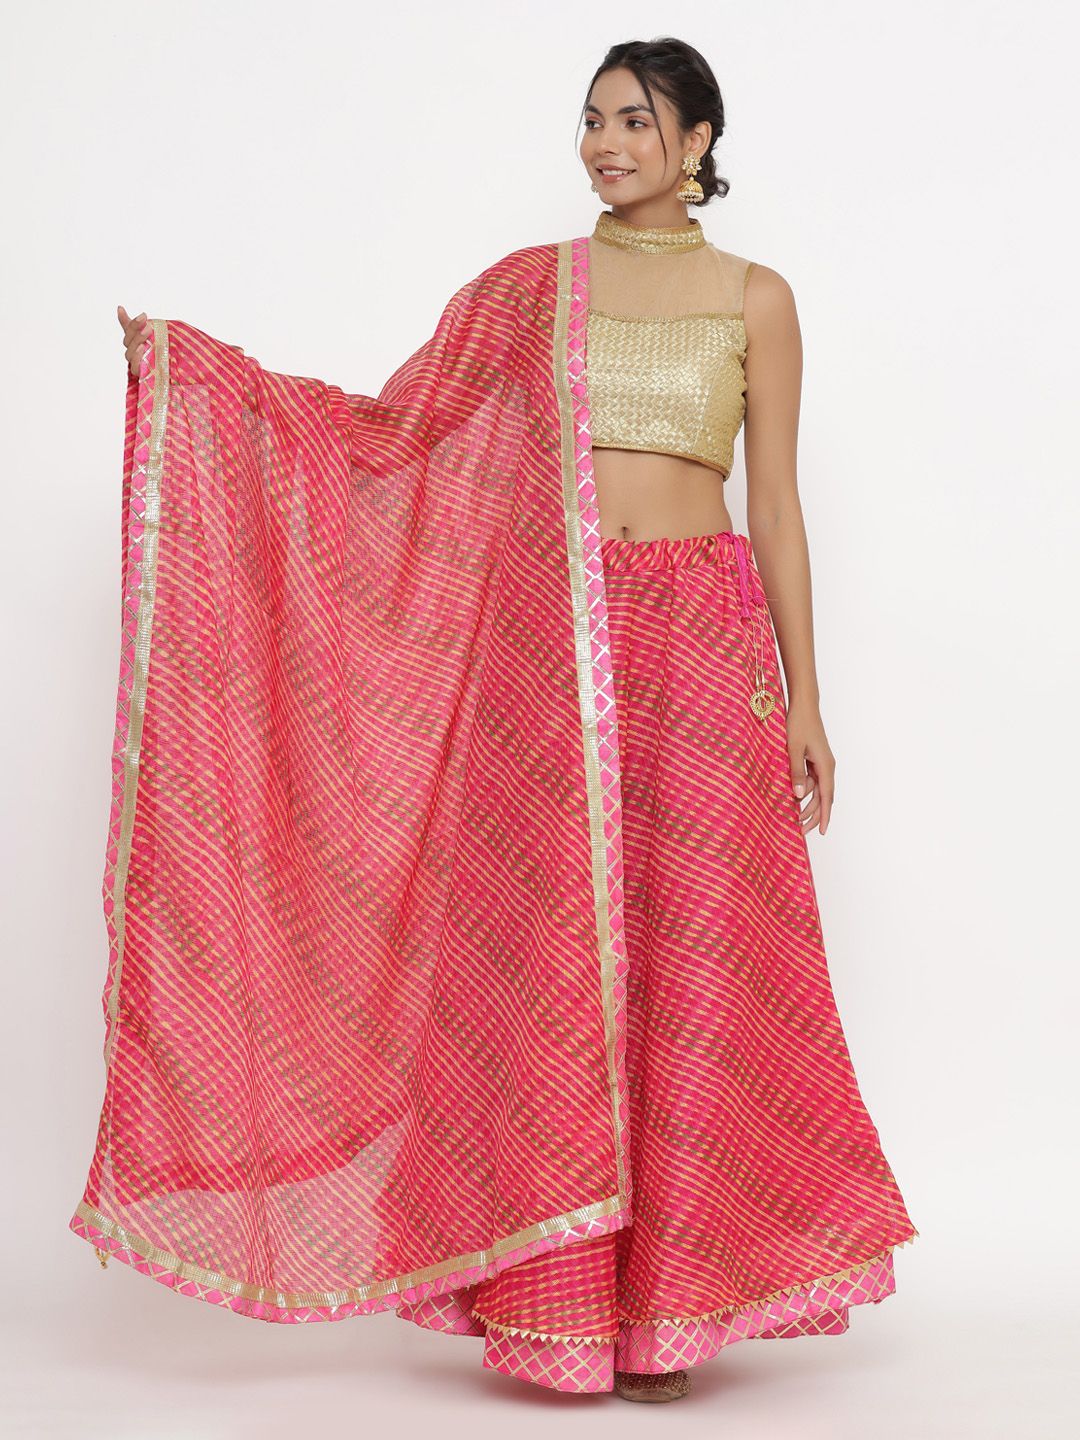 Kesarya Rose & Gold-Toned Embellished Lehenga & Unstitched Blouse With Dupatta Price in India